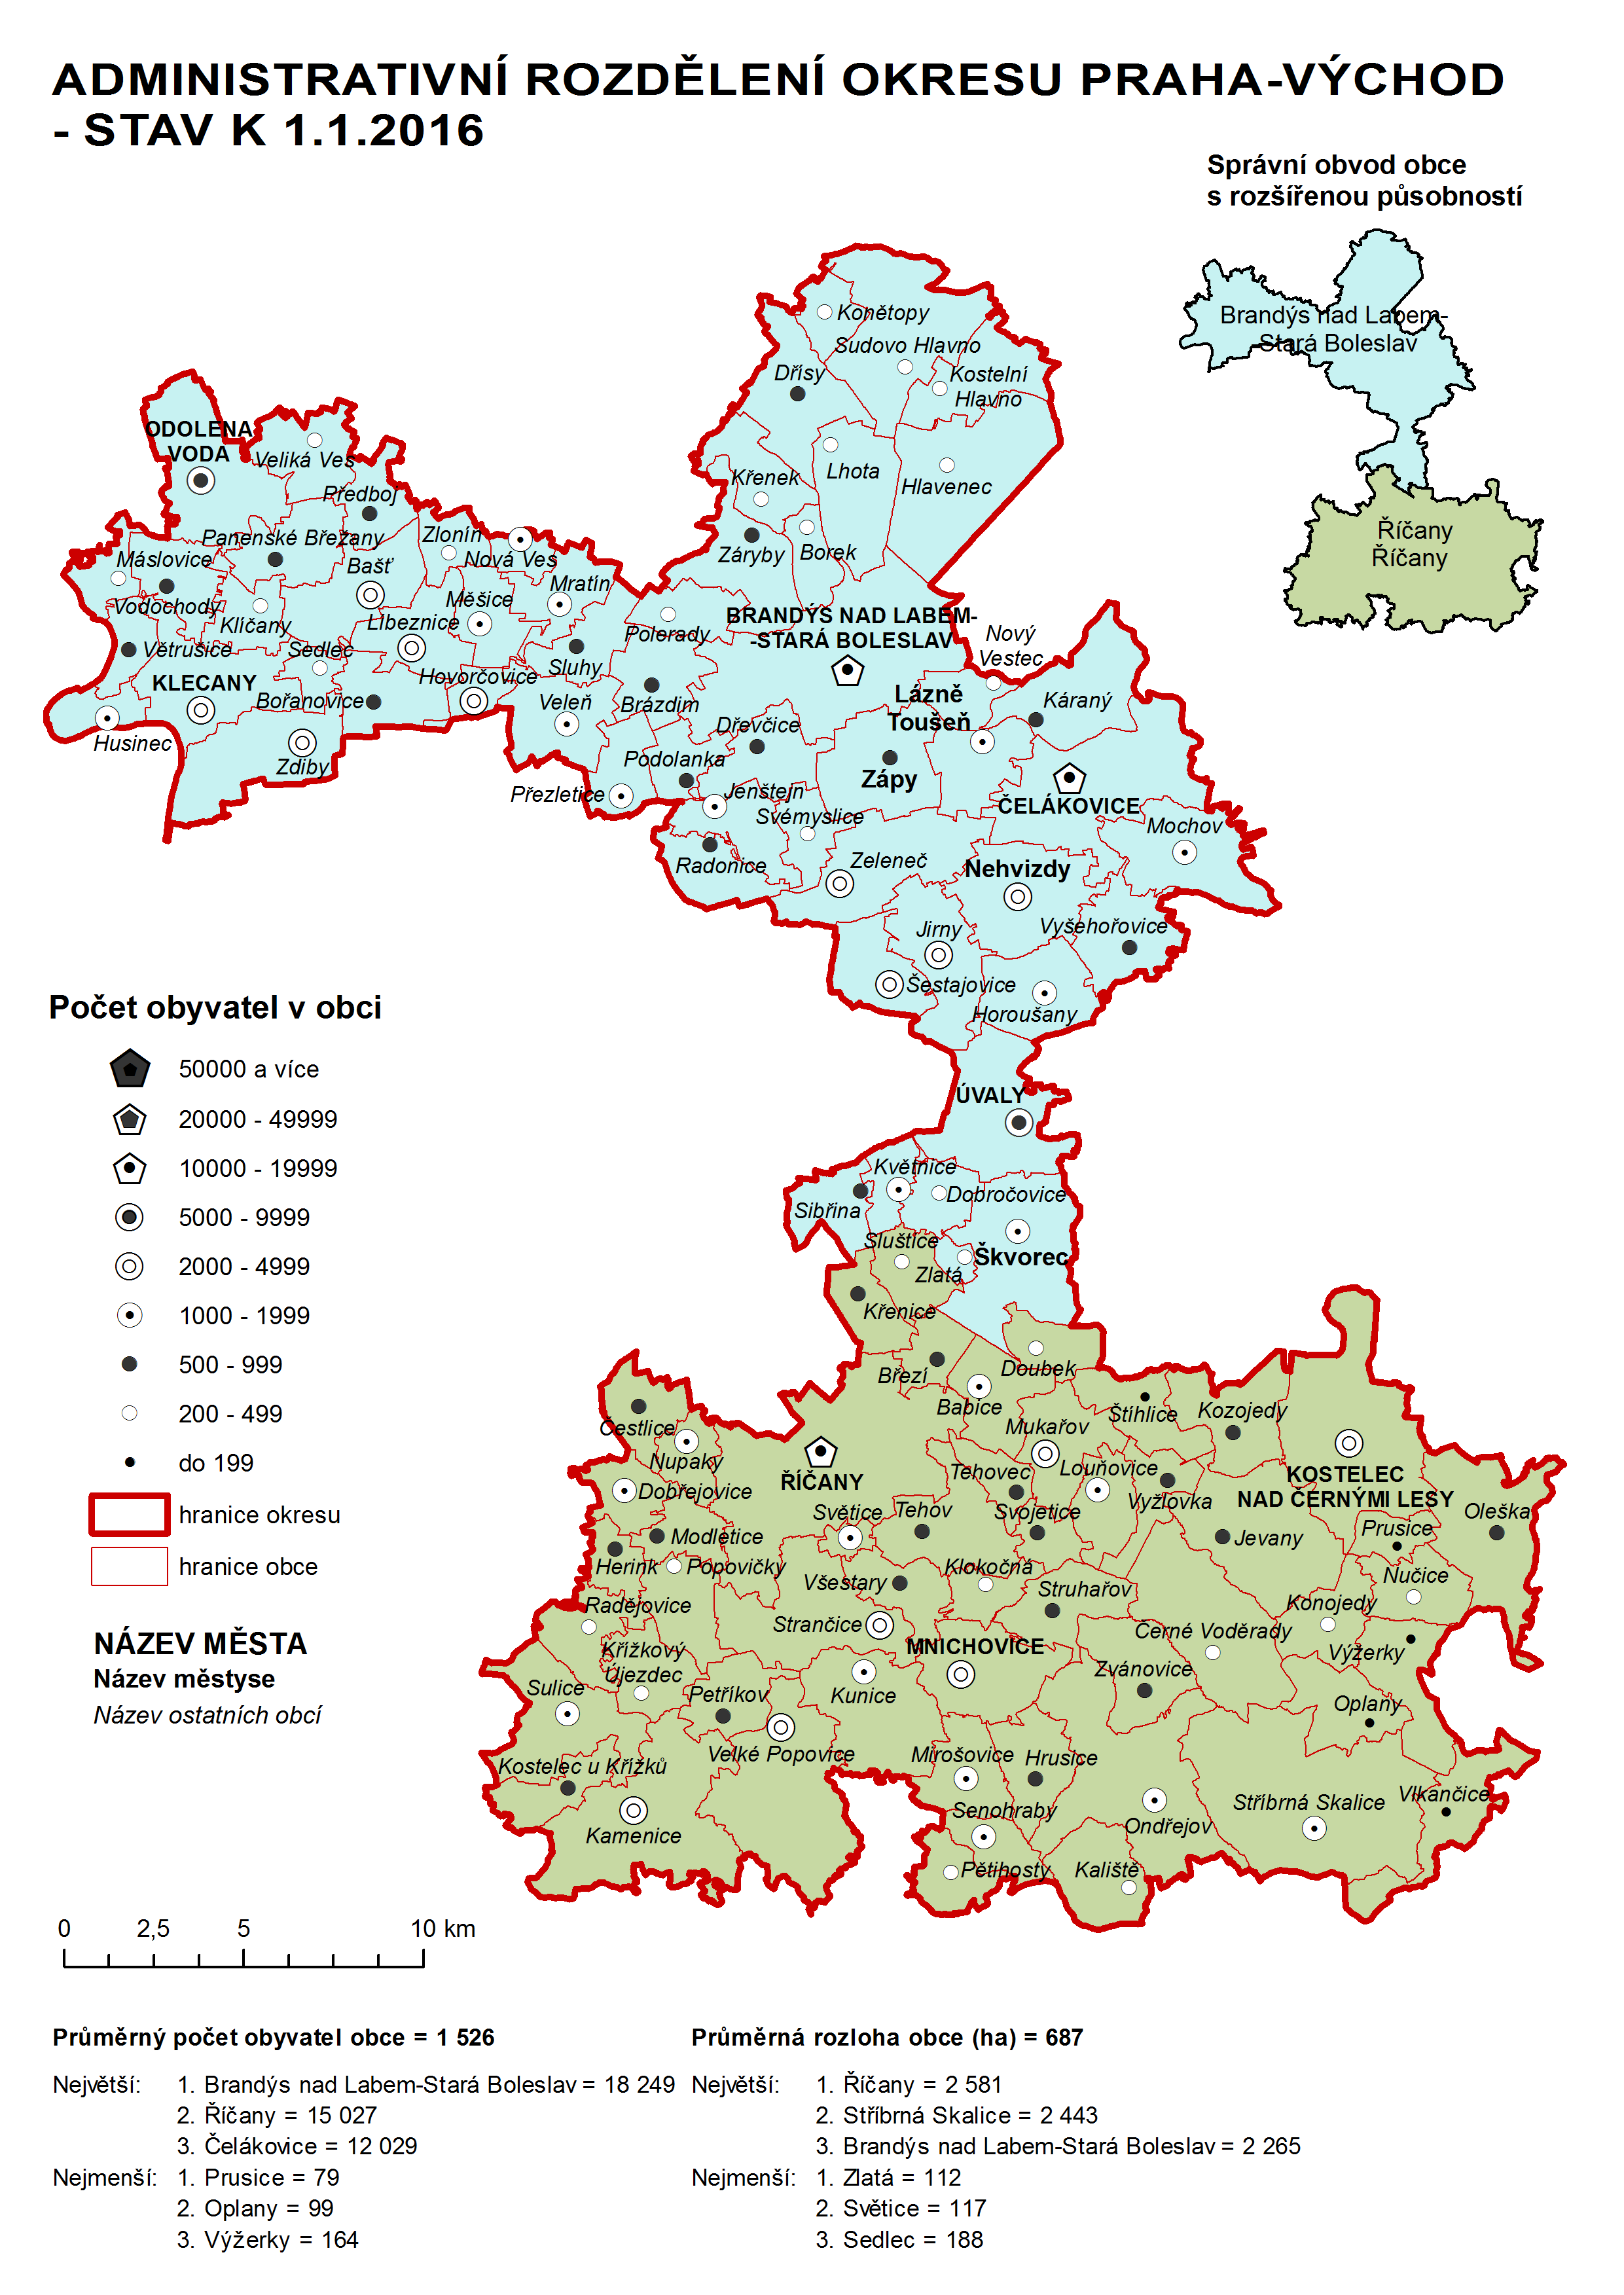 Administrativni rozdělení okresu Praha-východ - stav k 1.1.2016